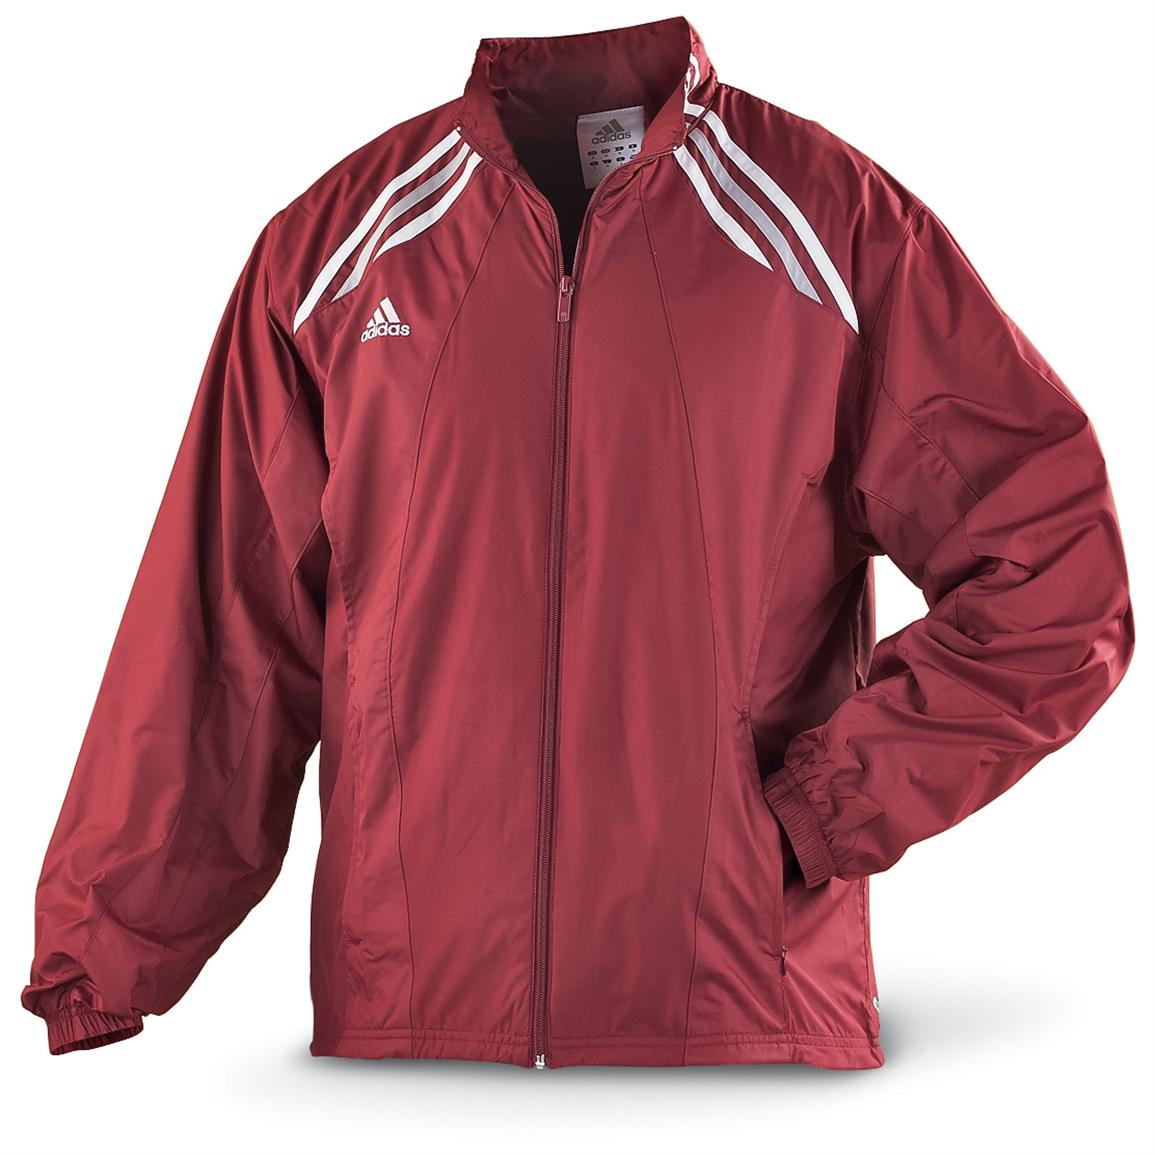 Adidas® ClimaLite® Warm-up Jacket, Cardinal - 120887, at Sportsman's Guide